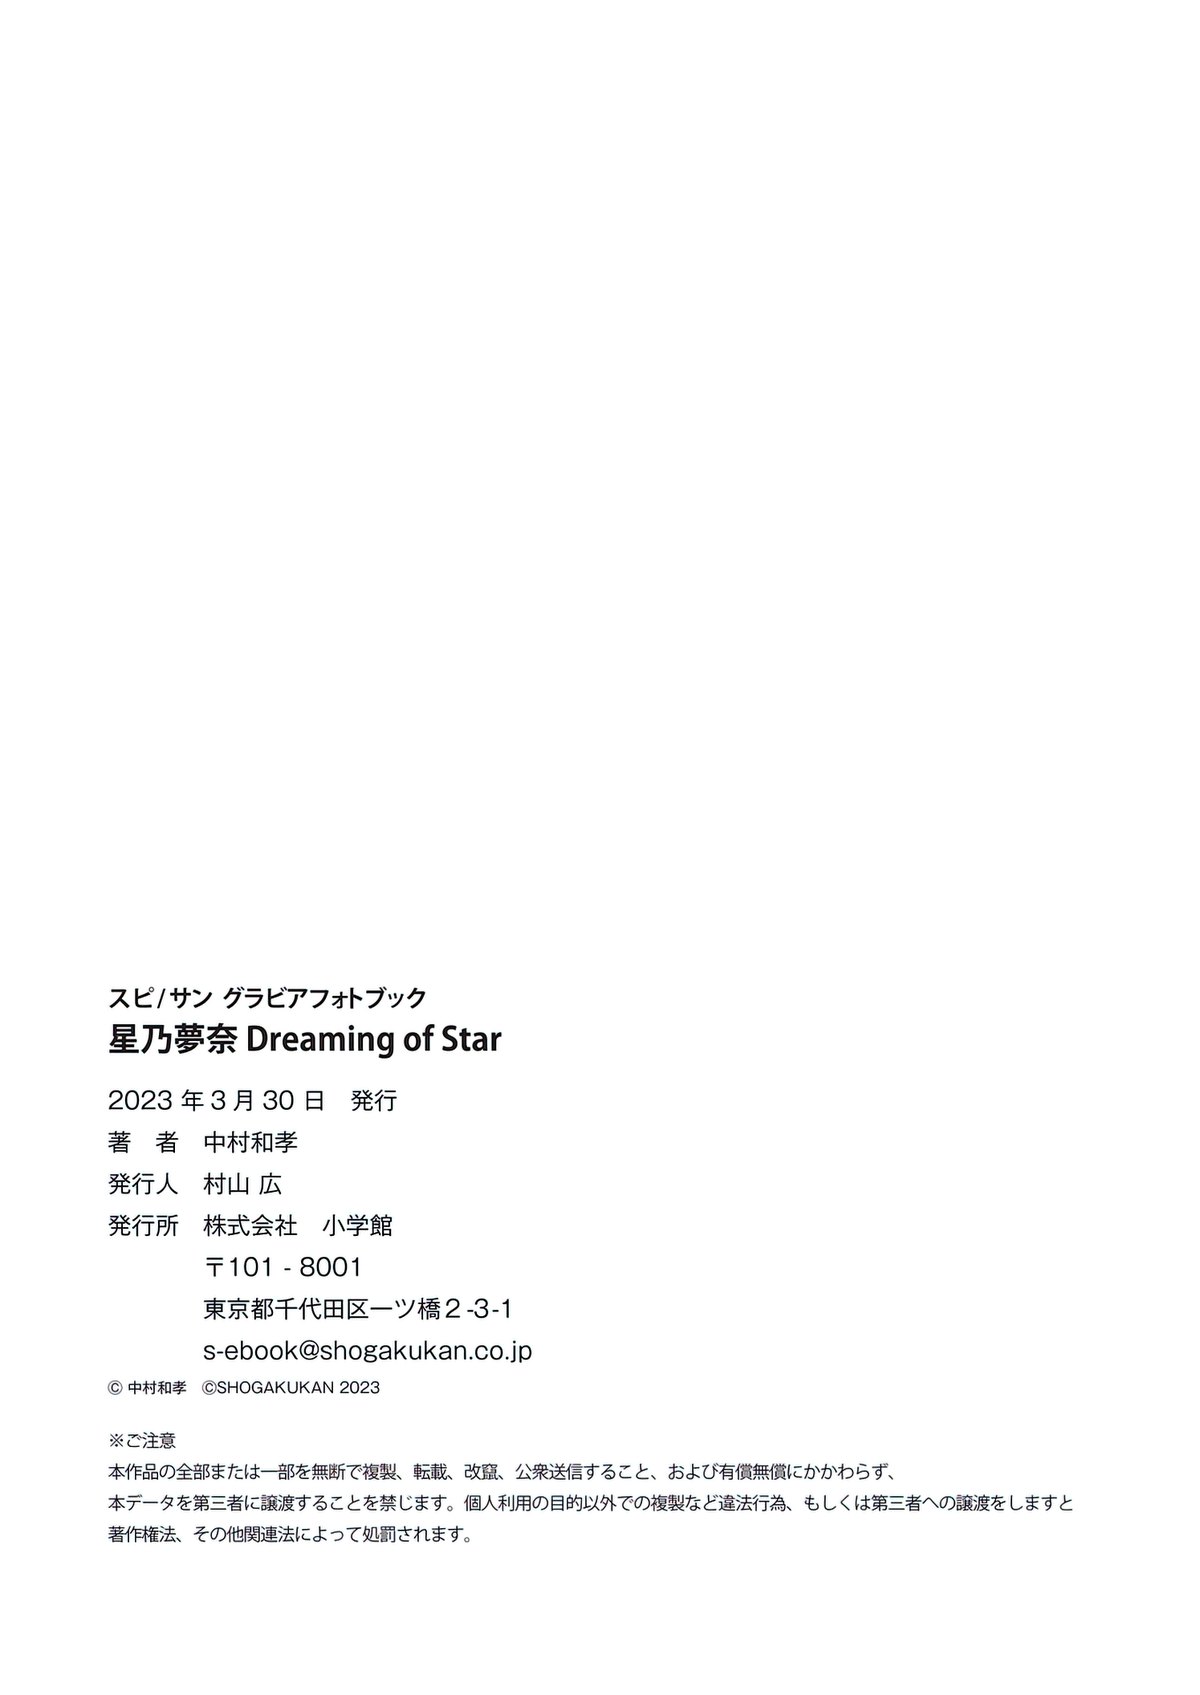 Photobook 2023 03 30 Yuna Hoshino 星乃夢奈 Dreaming Of Star 0043 1588072326.jpg